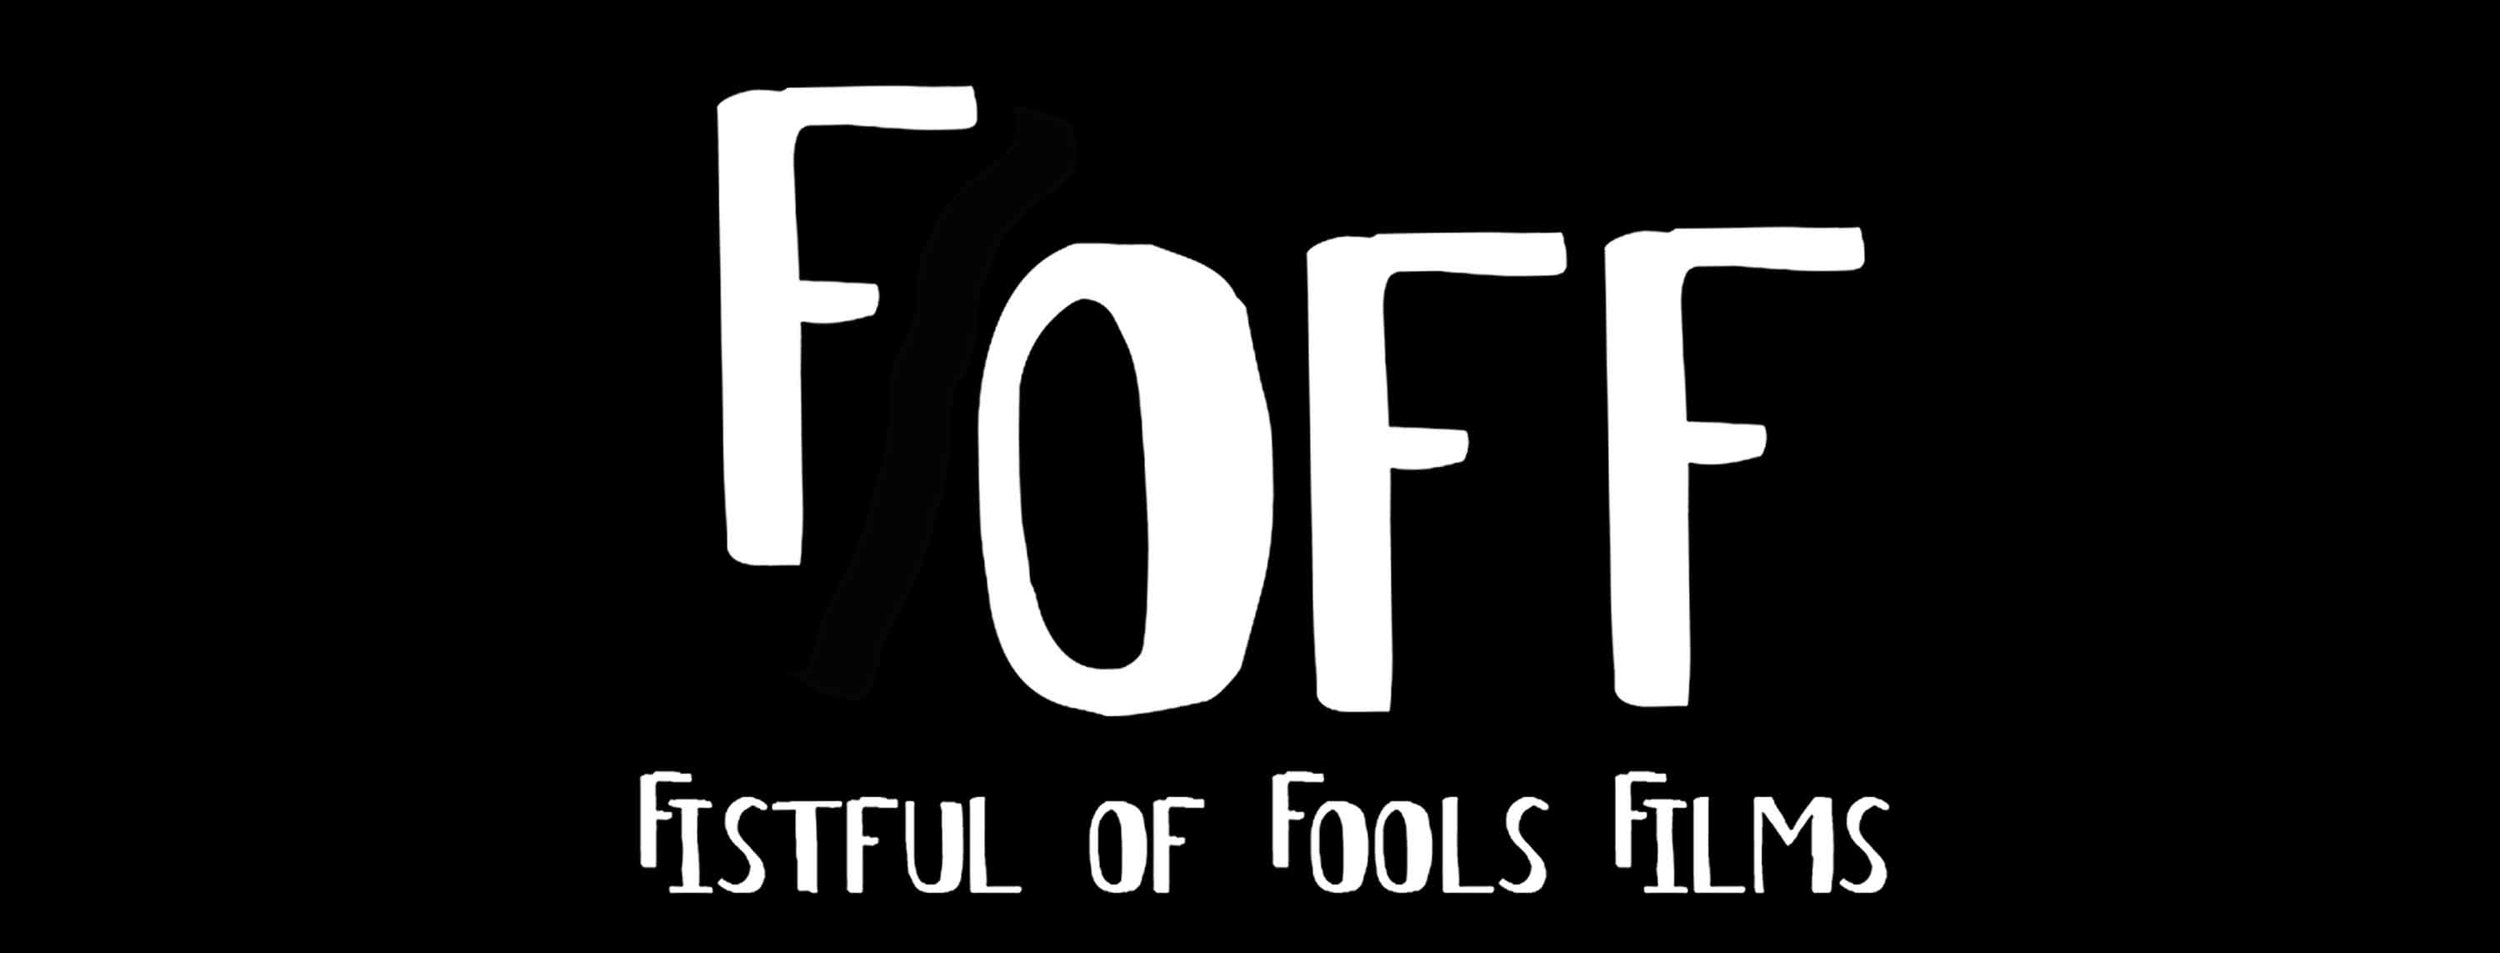 FOFF-tv-Member-2-.jpg